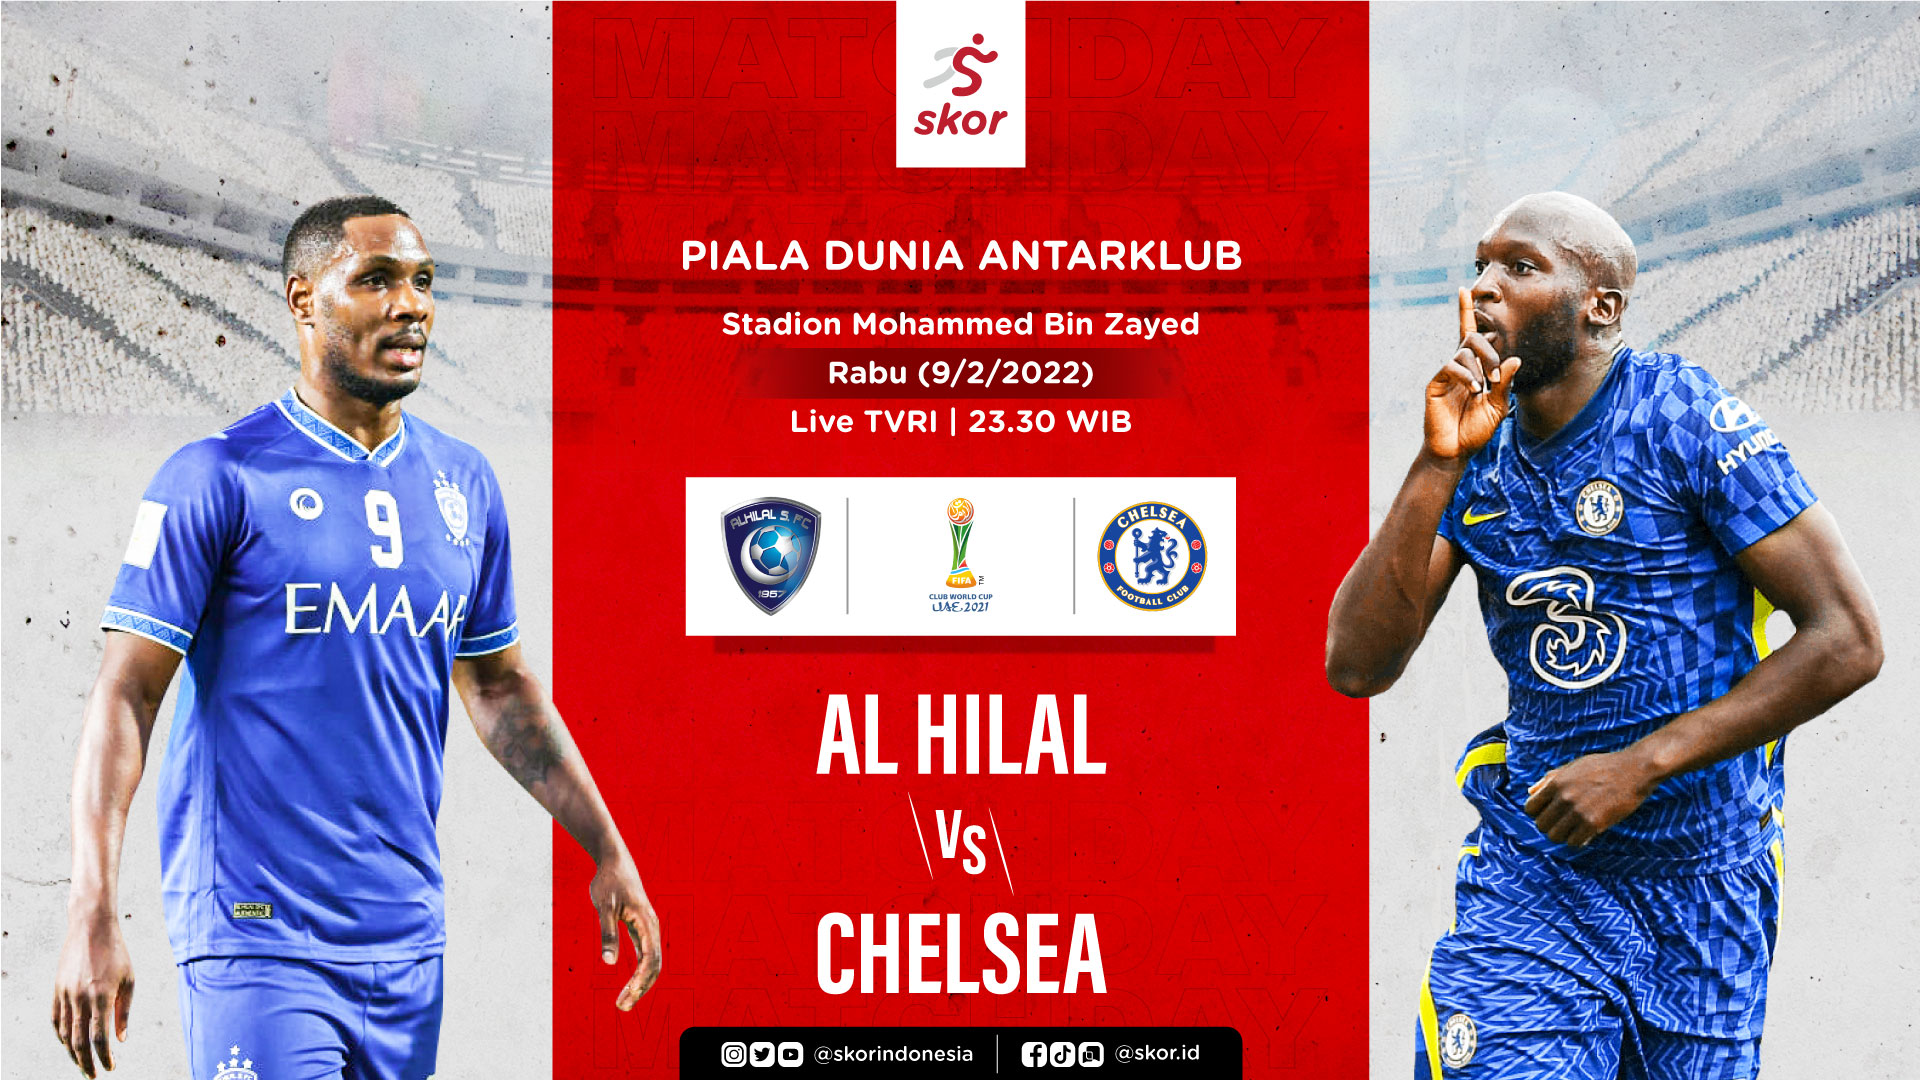 Prediksi Al Hilal vs Chelsea : Jalan The Blues Rebut Piala Dunia Antarklub